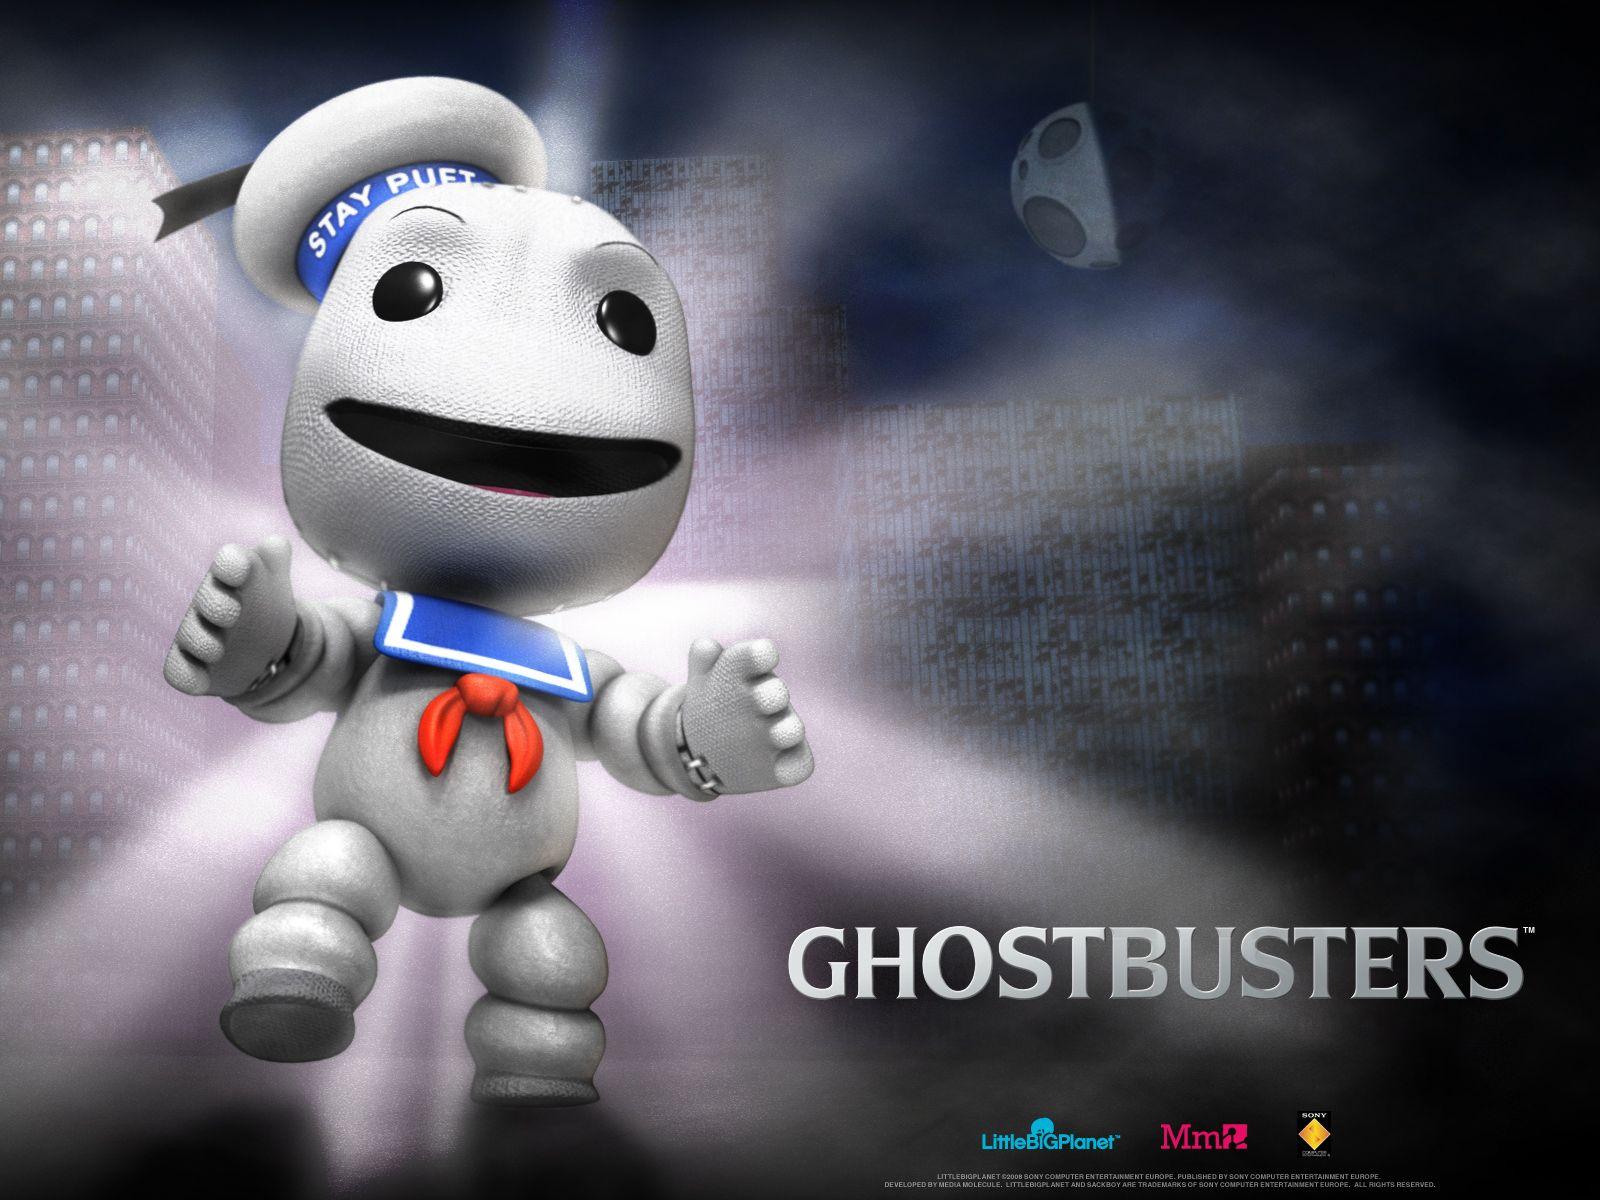 Ghostbusters LittleBigPlanet (Digital Content)